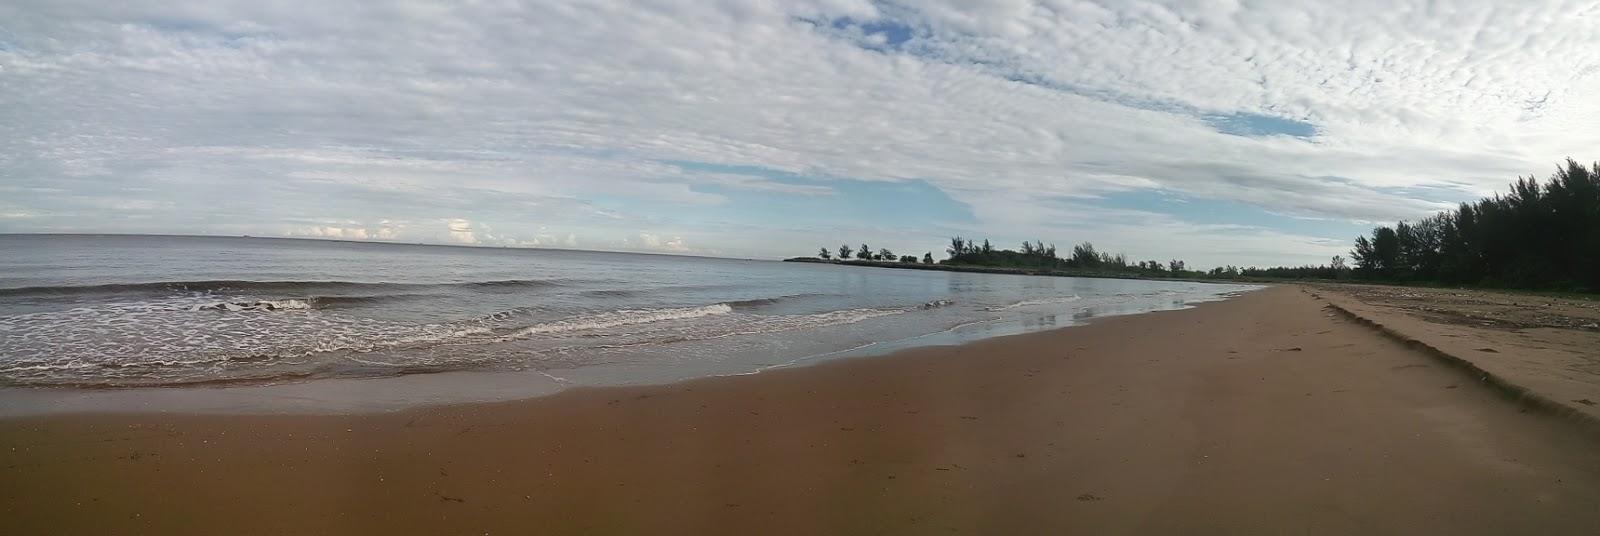 Sandee - Marina Beach